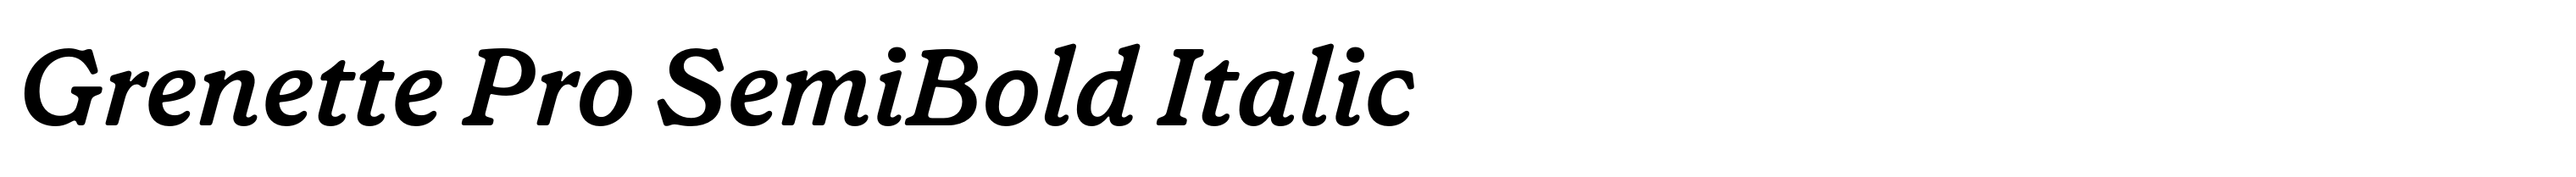 Grenette Pro SemiBold Italic